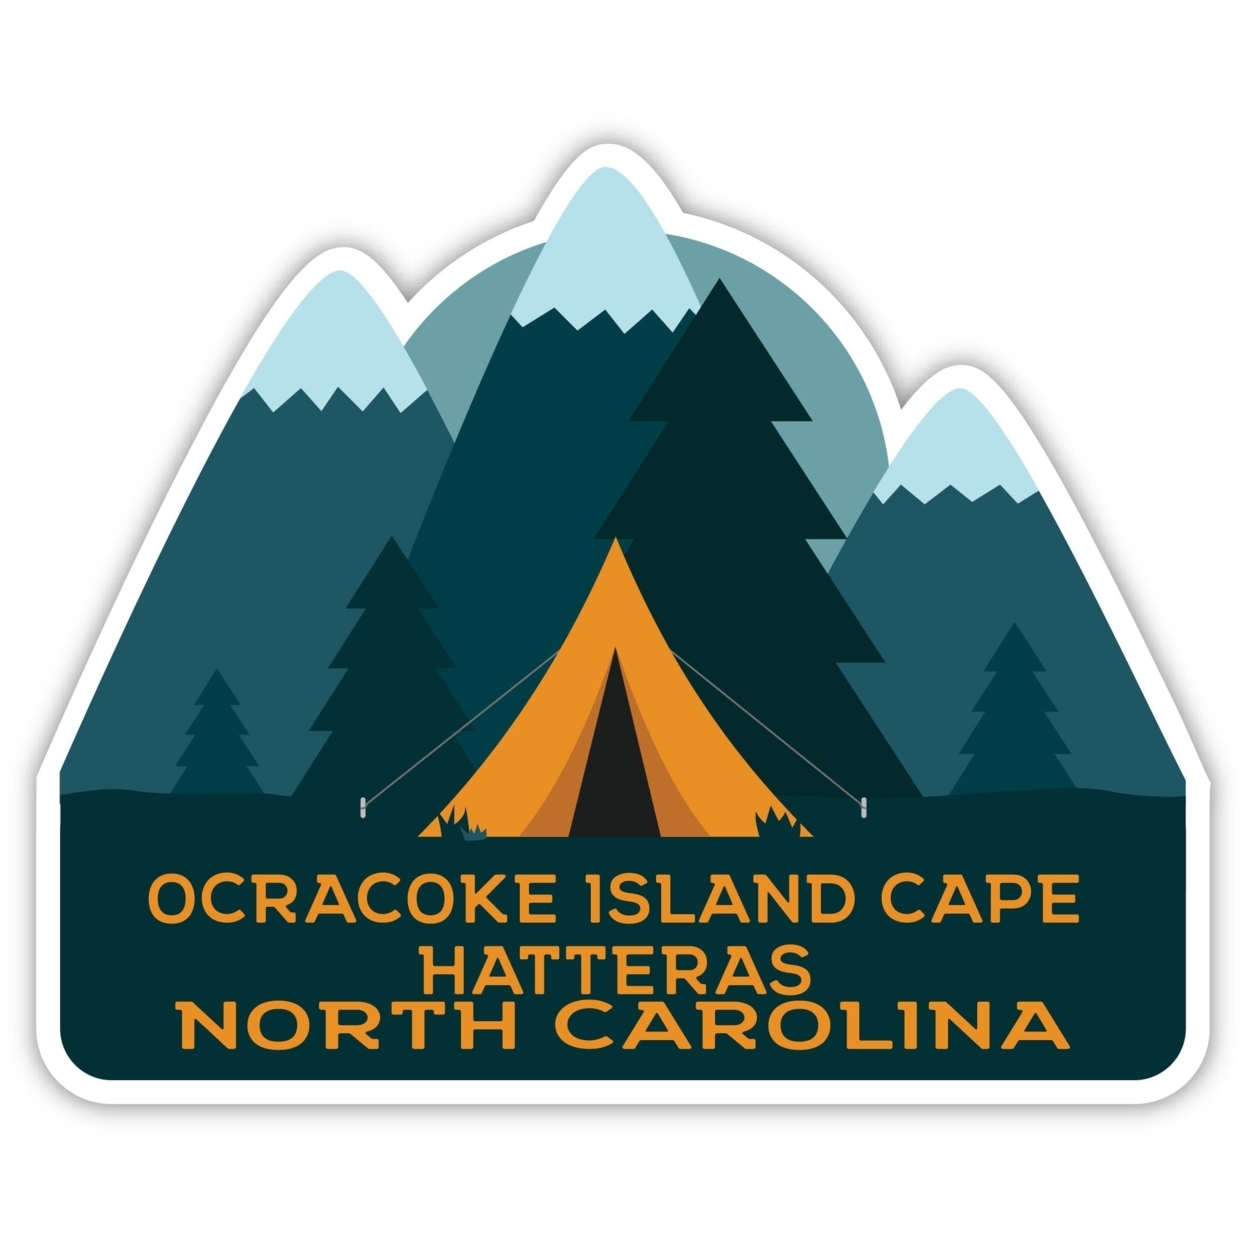 Ocracoke Island Cape Hatteras North Carolina Souvenir Decorative Stickers (Choose Theme And Size) - Single Unit, 2-Inch, Tent